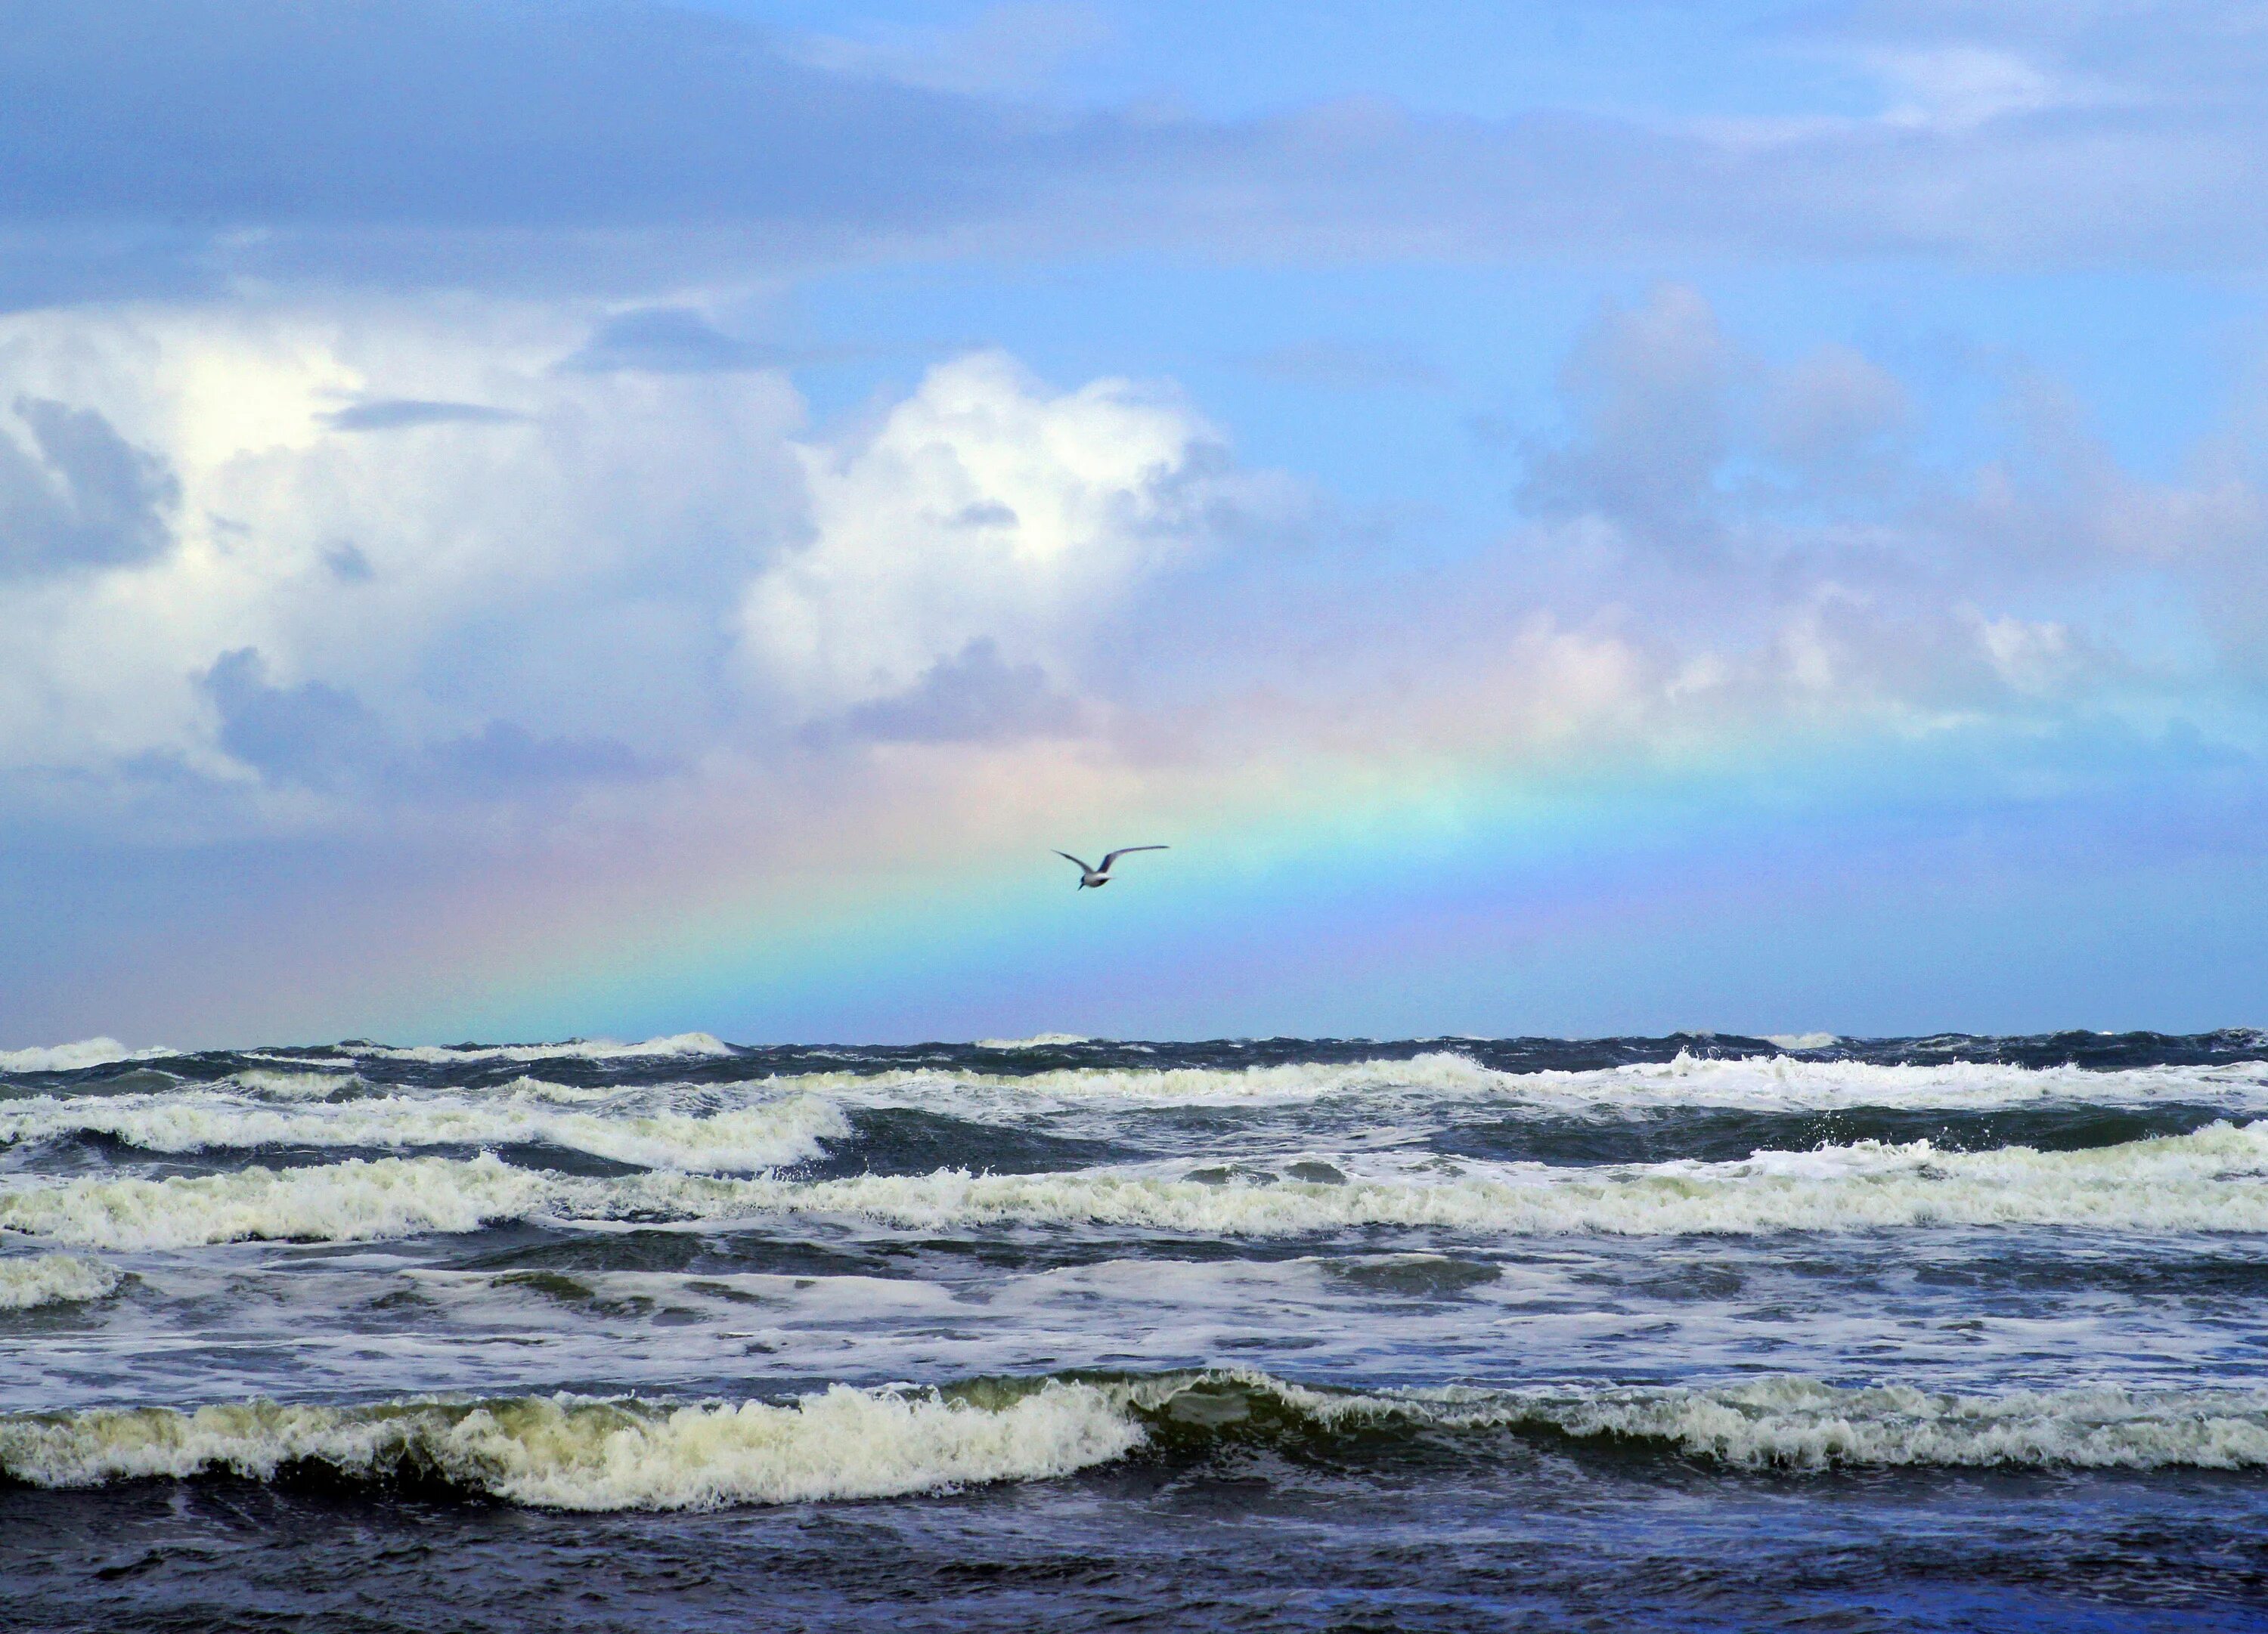 Прибой чайка. Балтийское море шторм Радуга. Облака над морем. Радуга над морем. Чайки над морем.